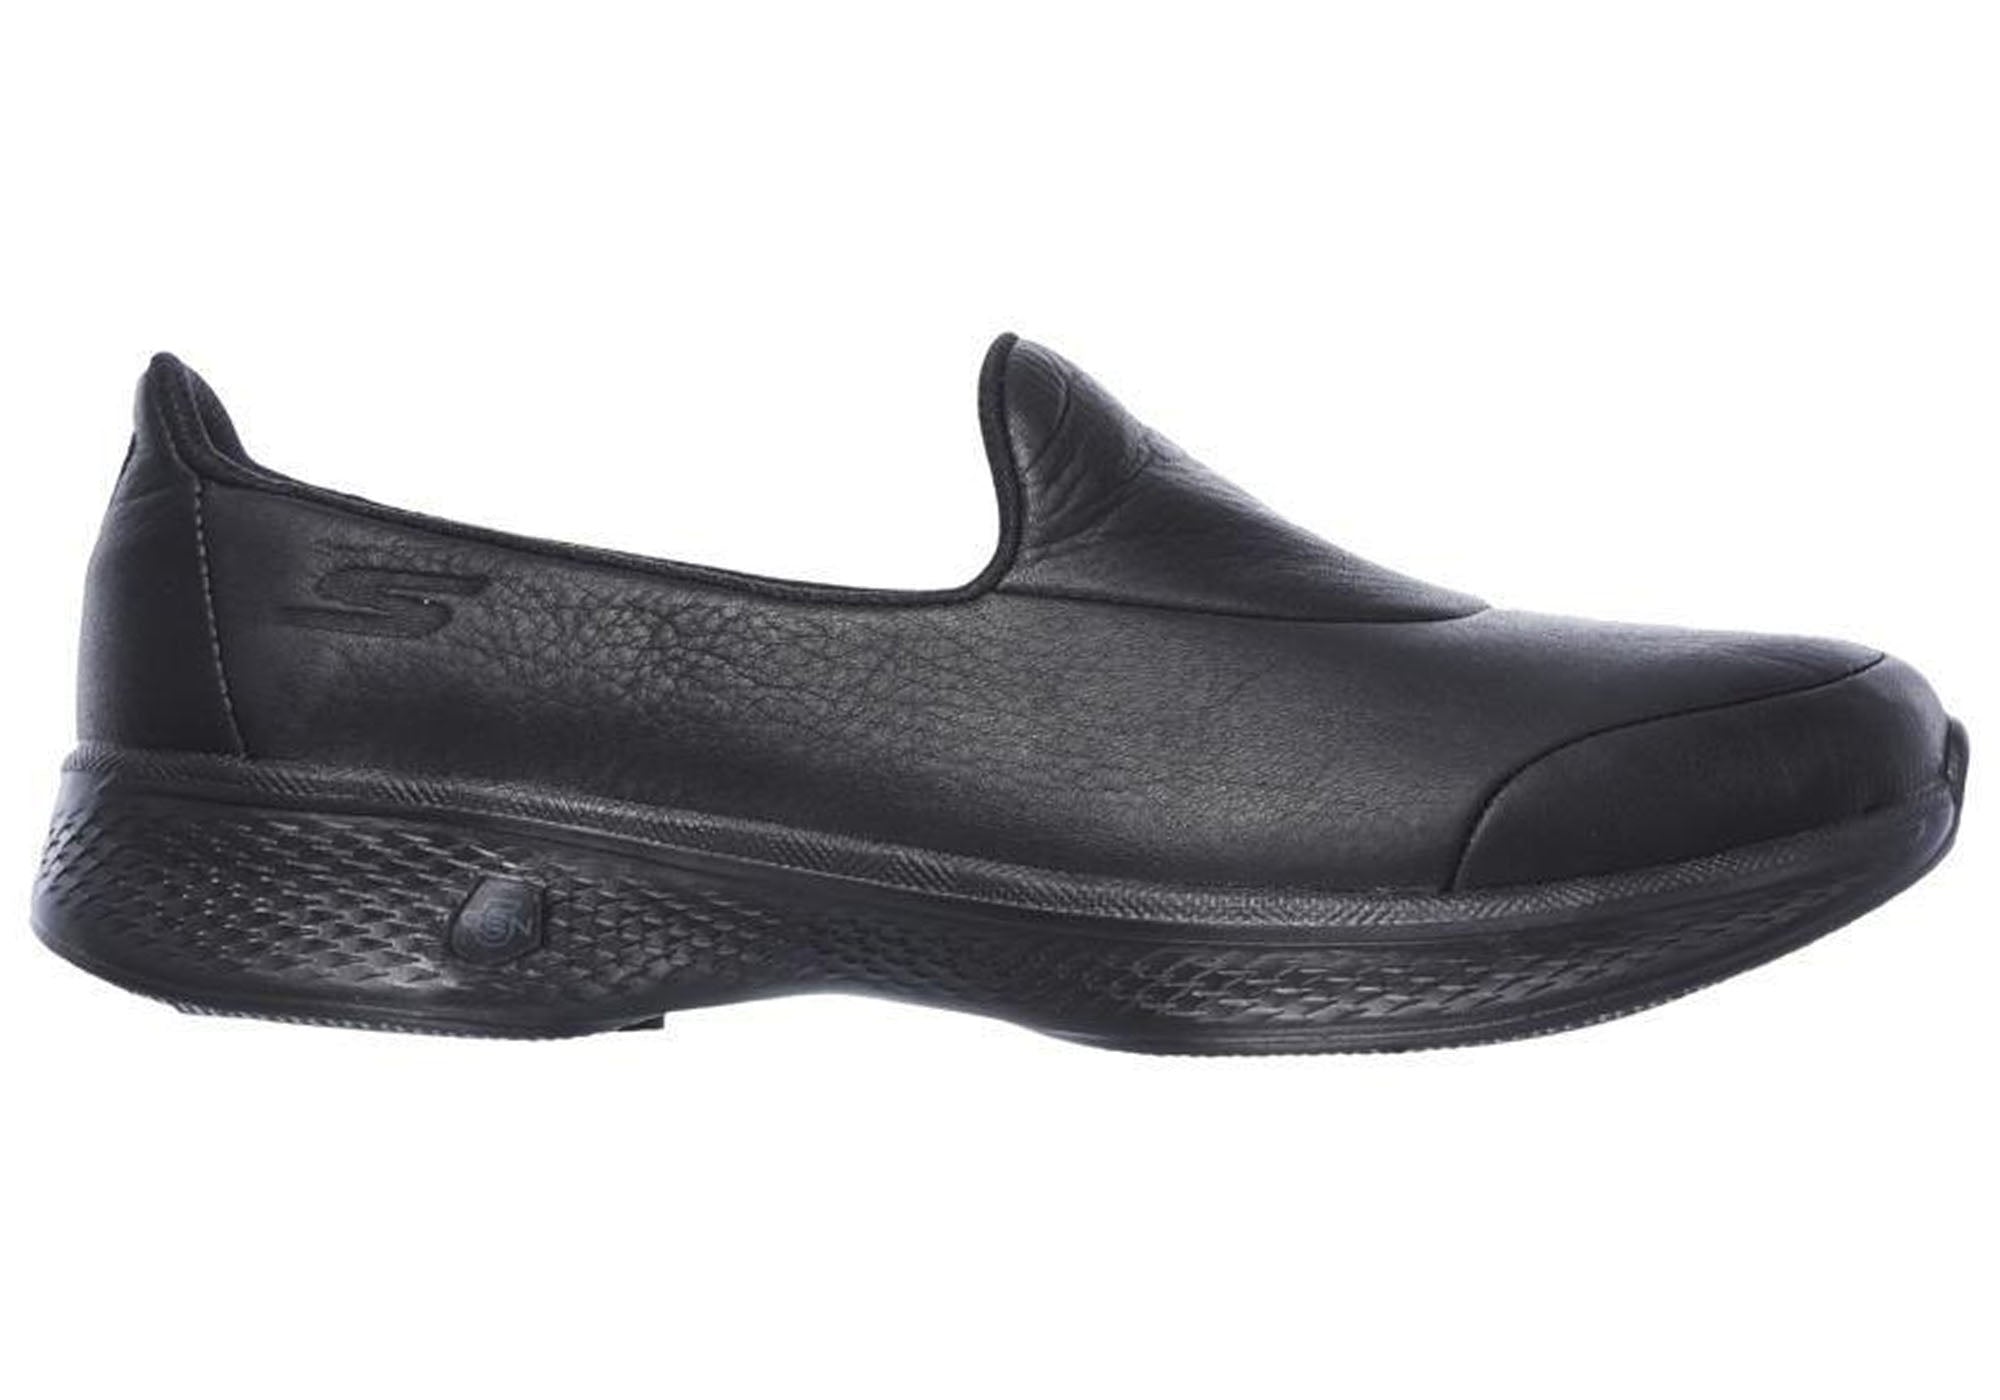 skechers black leather shoes Online 